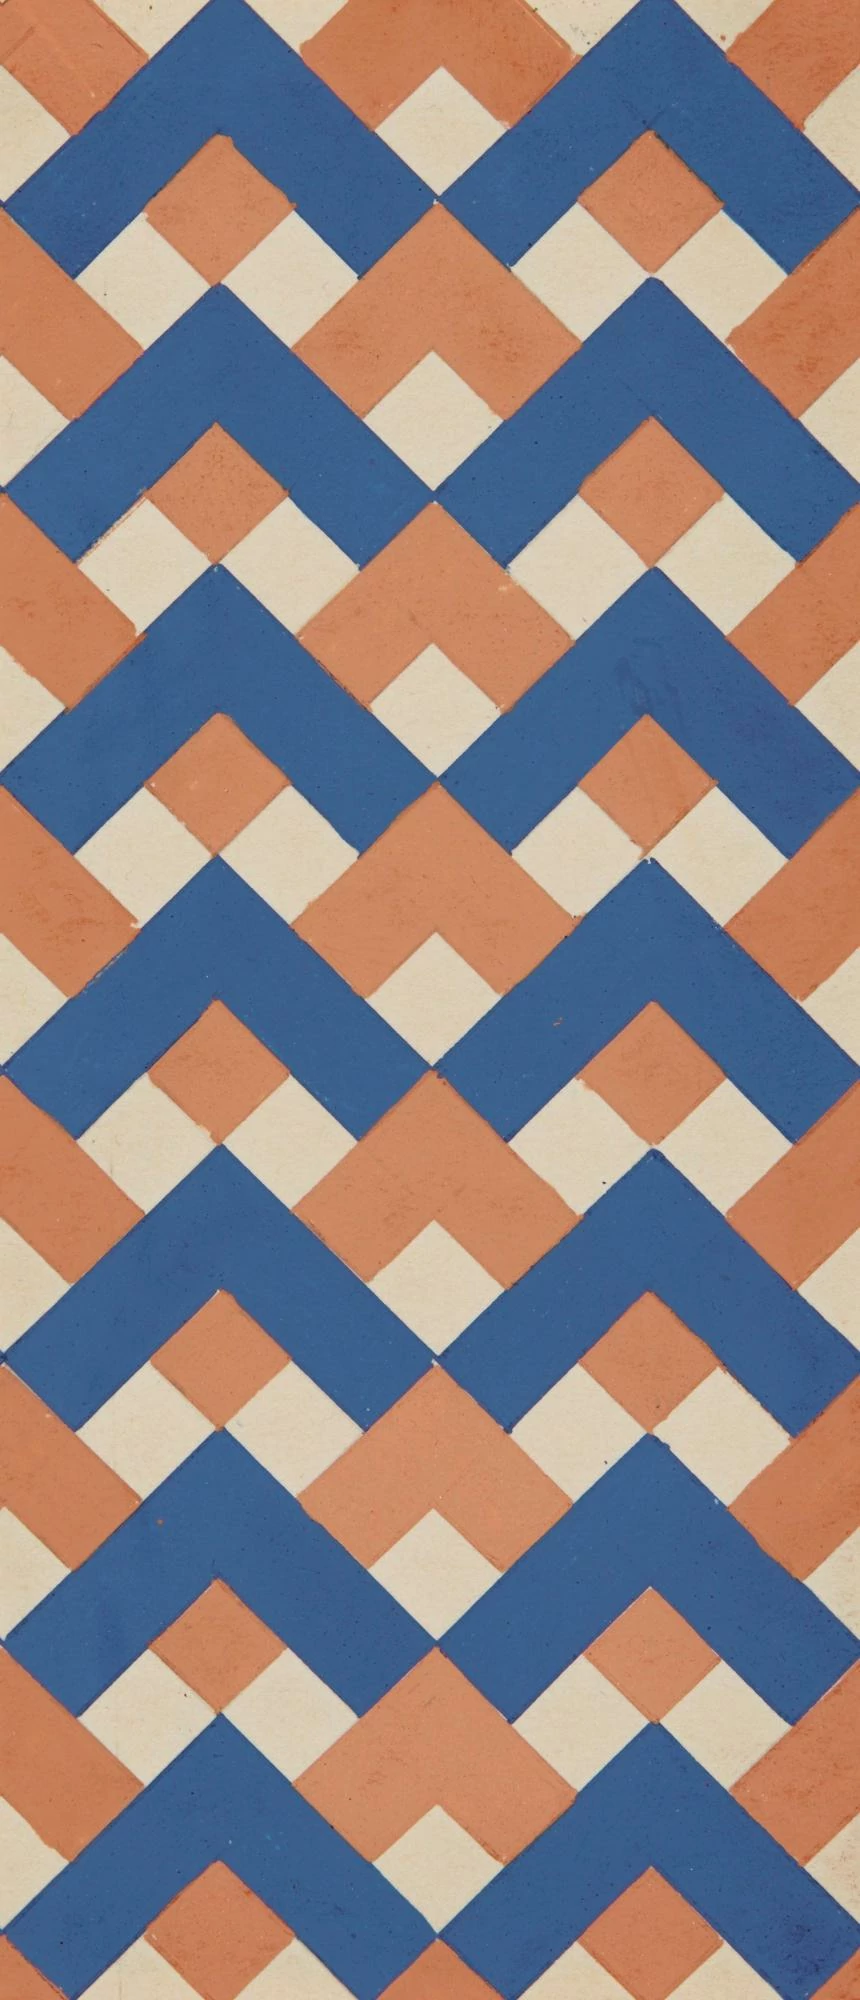 Textile Design in Blue and Orange, Varvara Stepanova